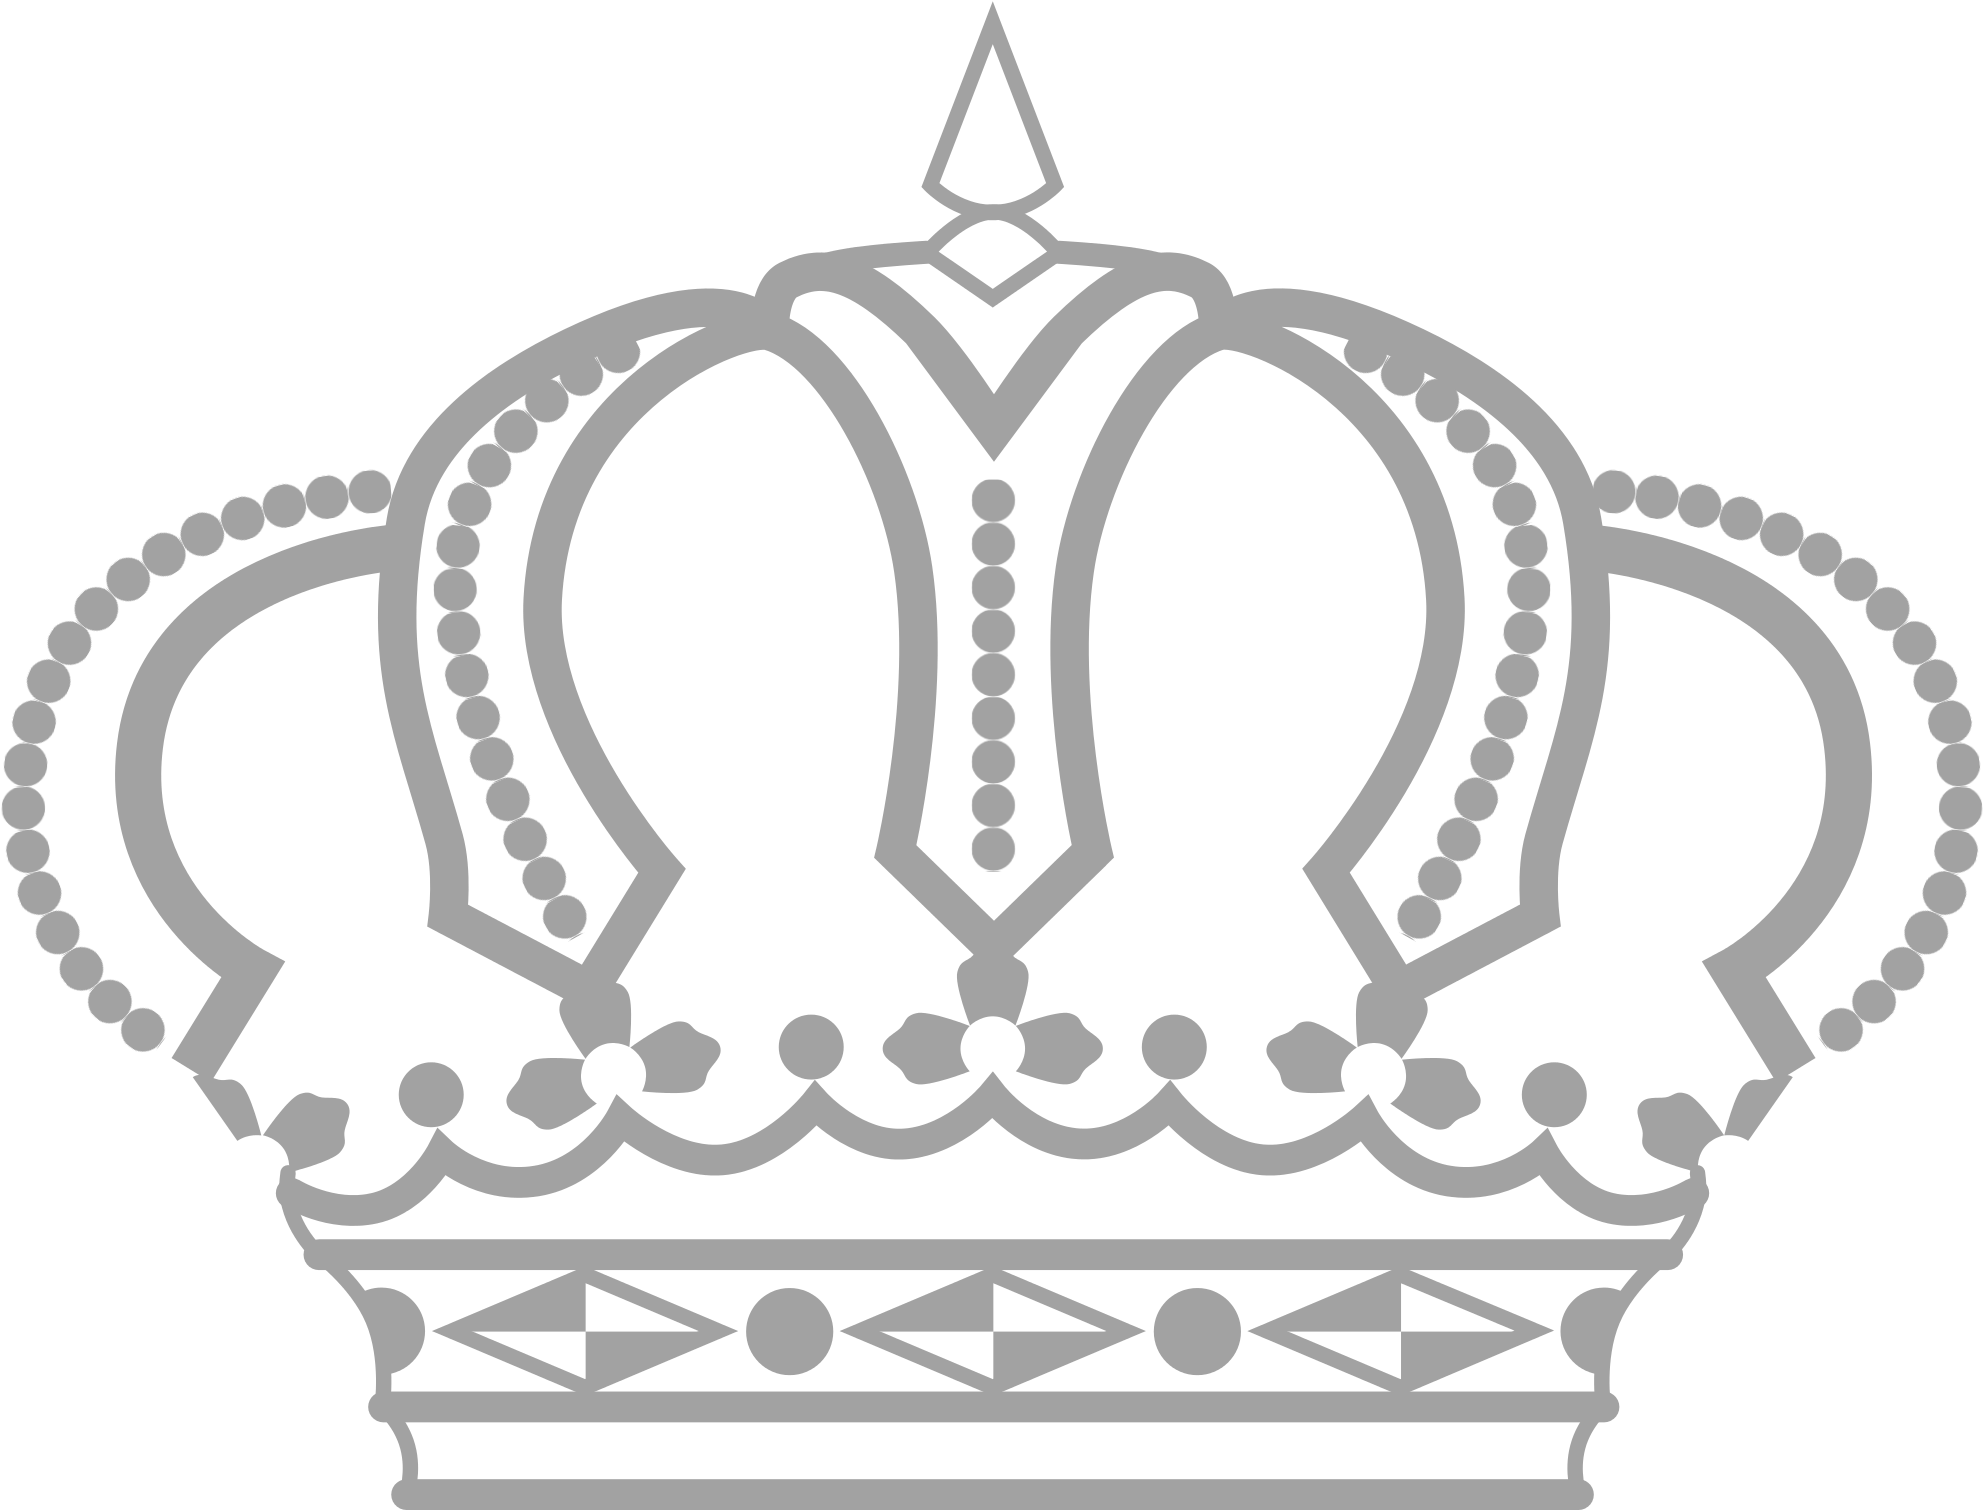 Royal Prince Crown PNG Image Background